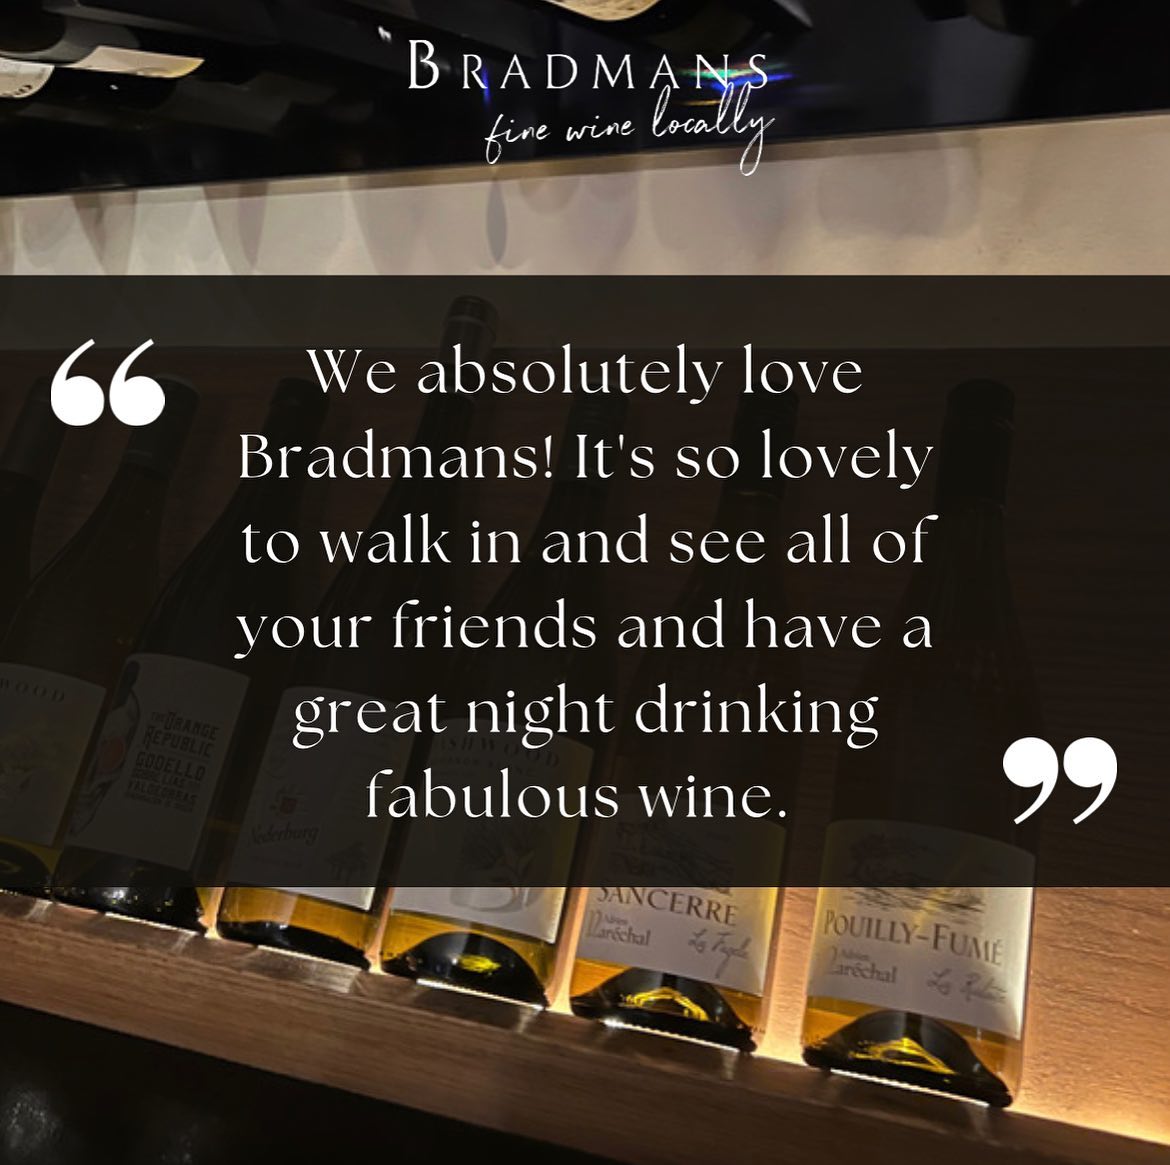 Bradmans Wine Cellar - Duffield